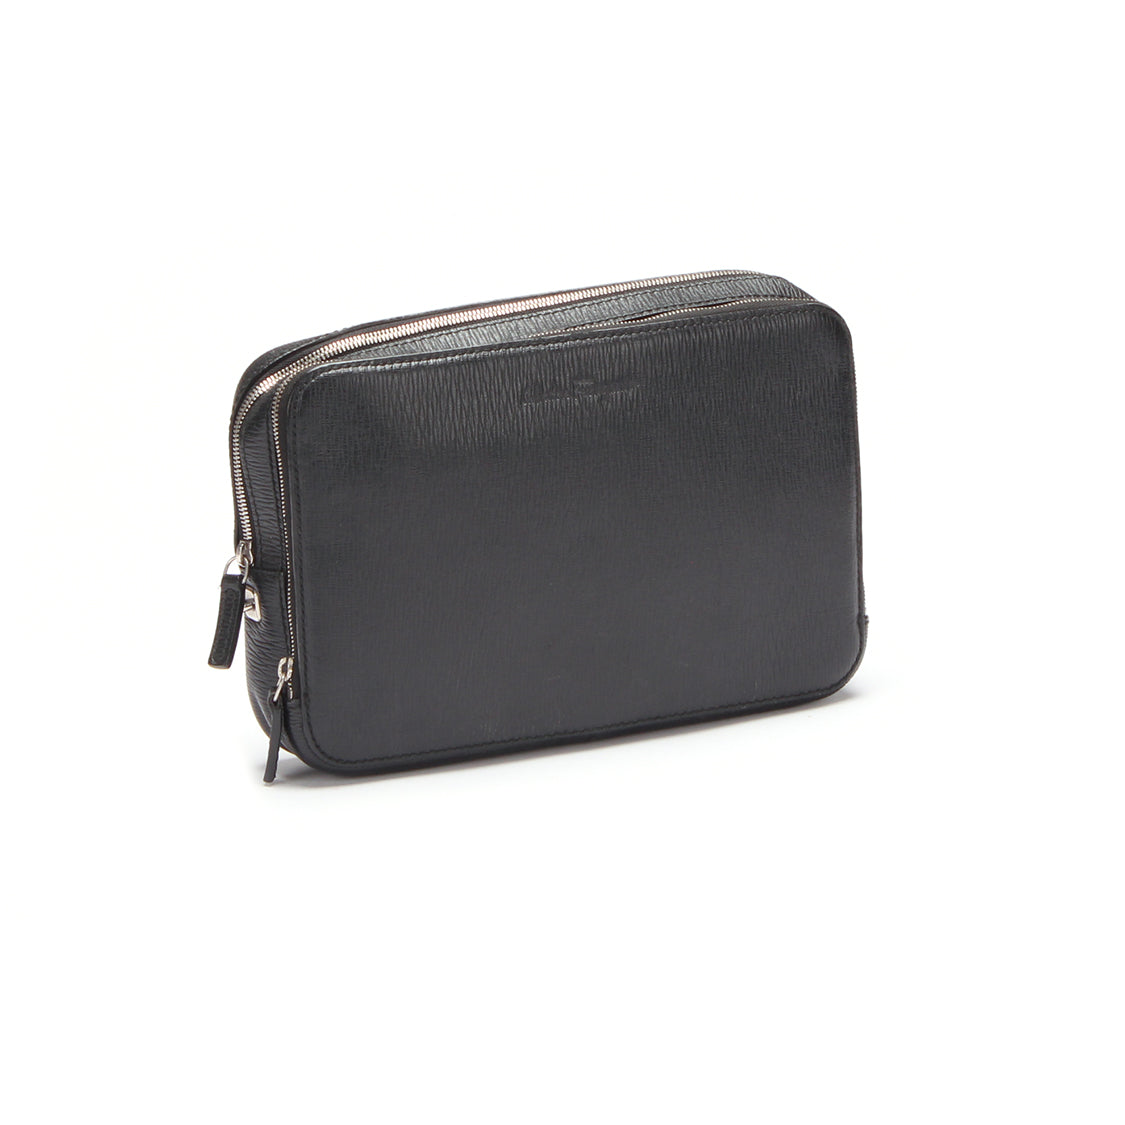 Leather Clutch Bag FZ-24 9480